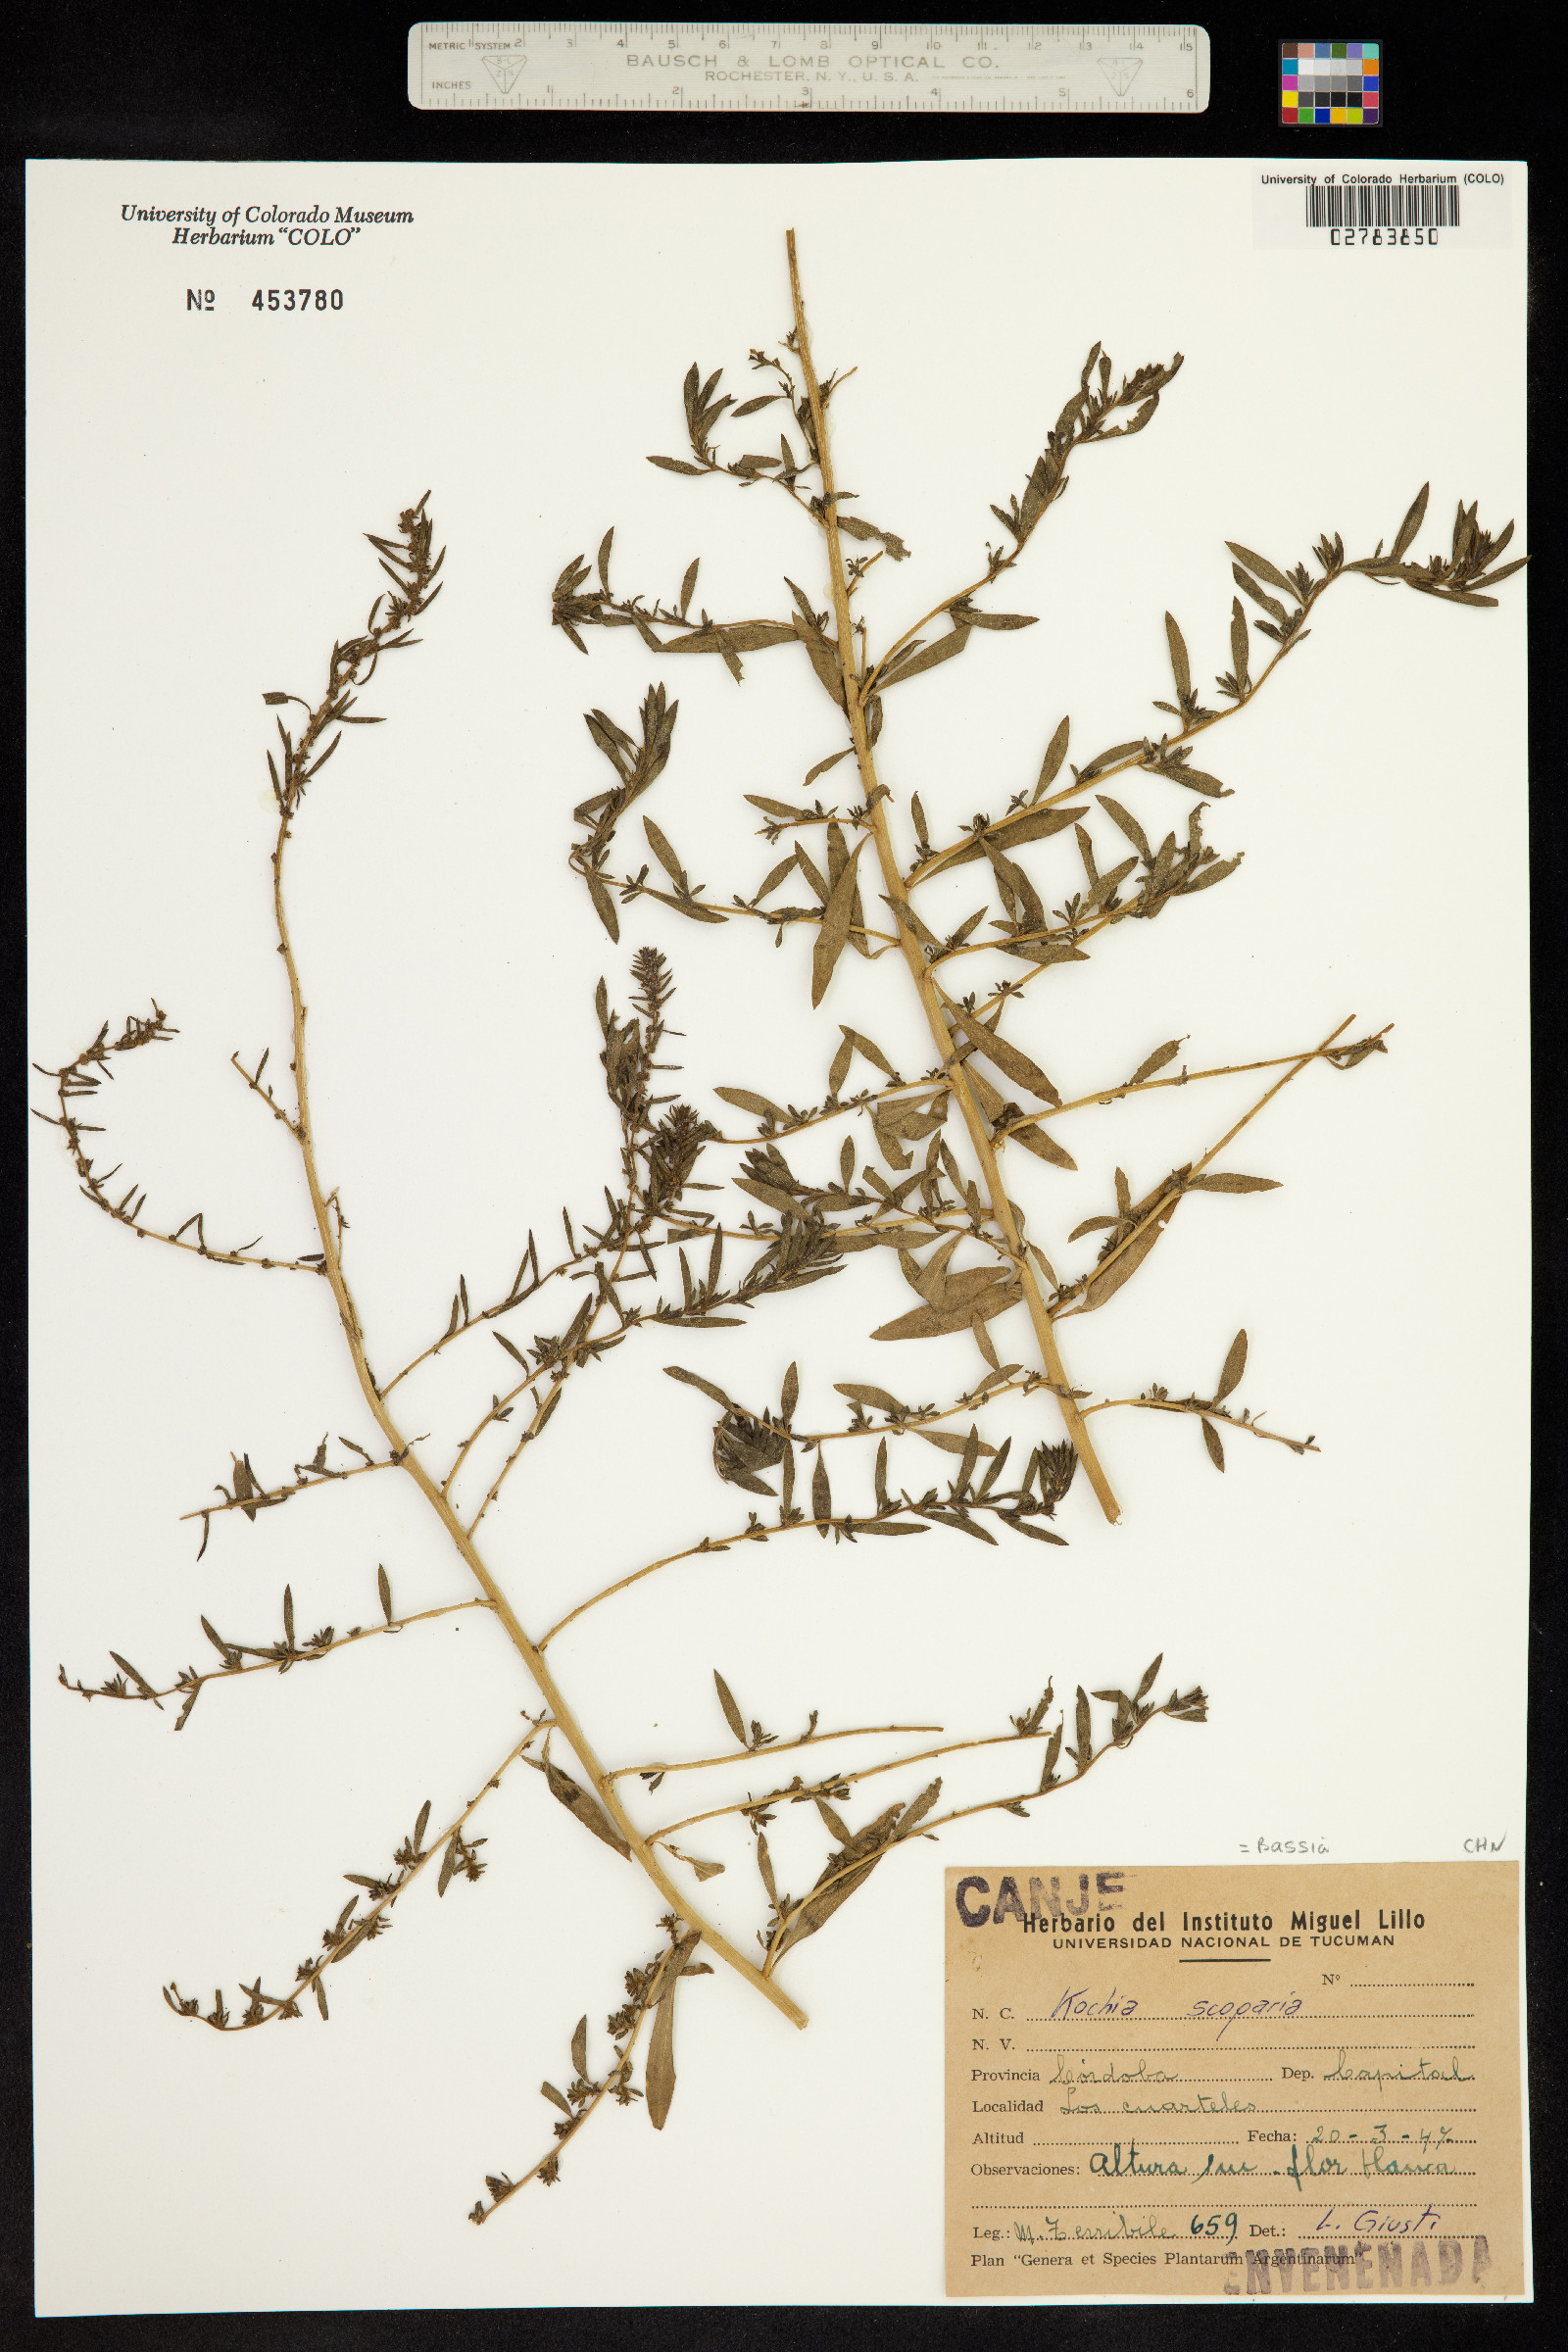 Kochia scoparia ssp. scoparia image